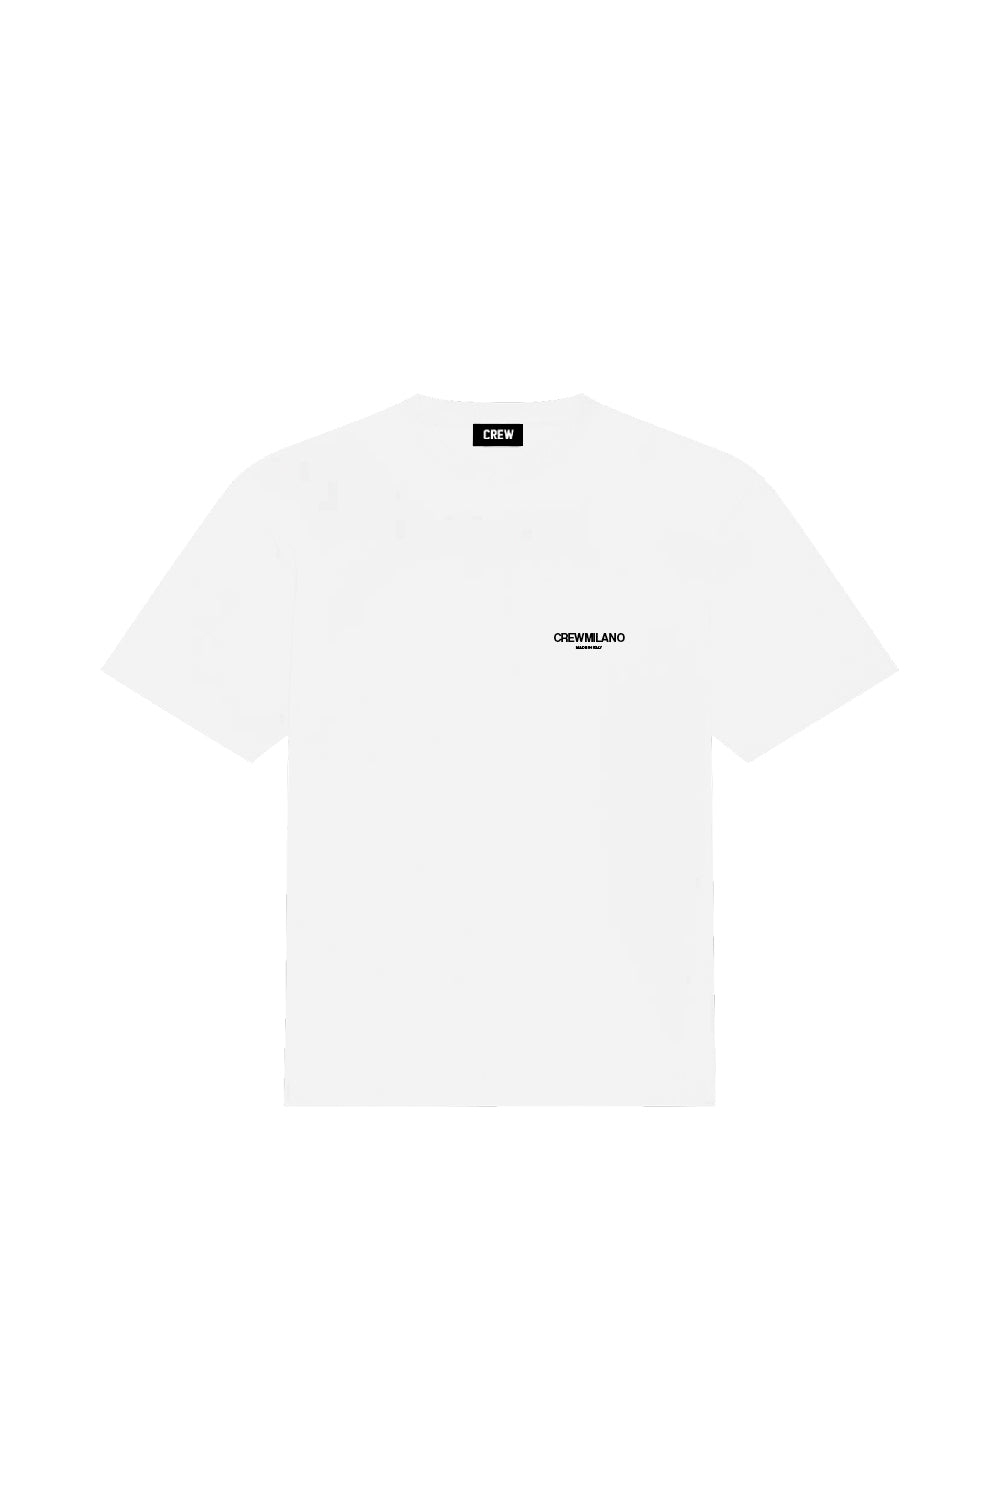 CREW Milano LONDON White T-Shirt